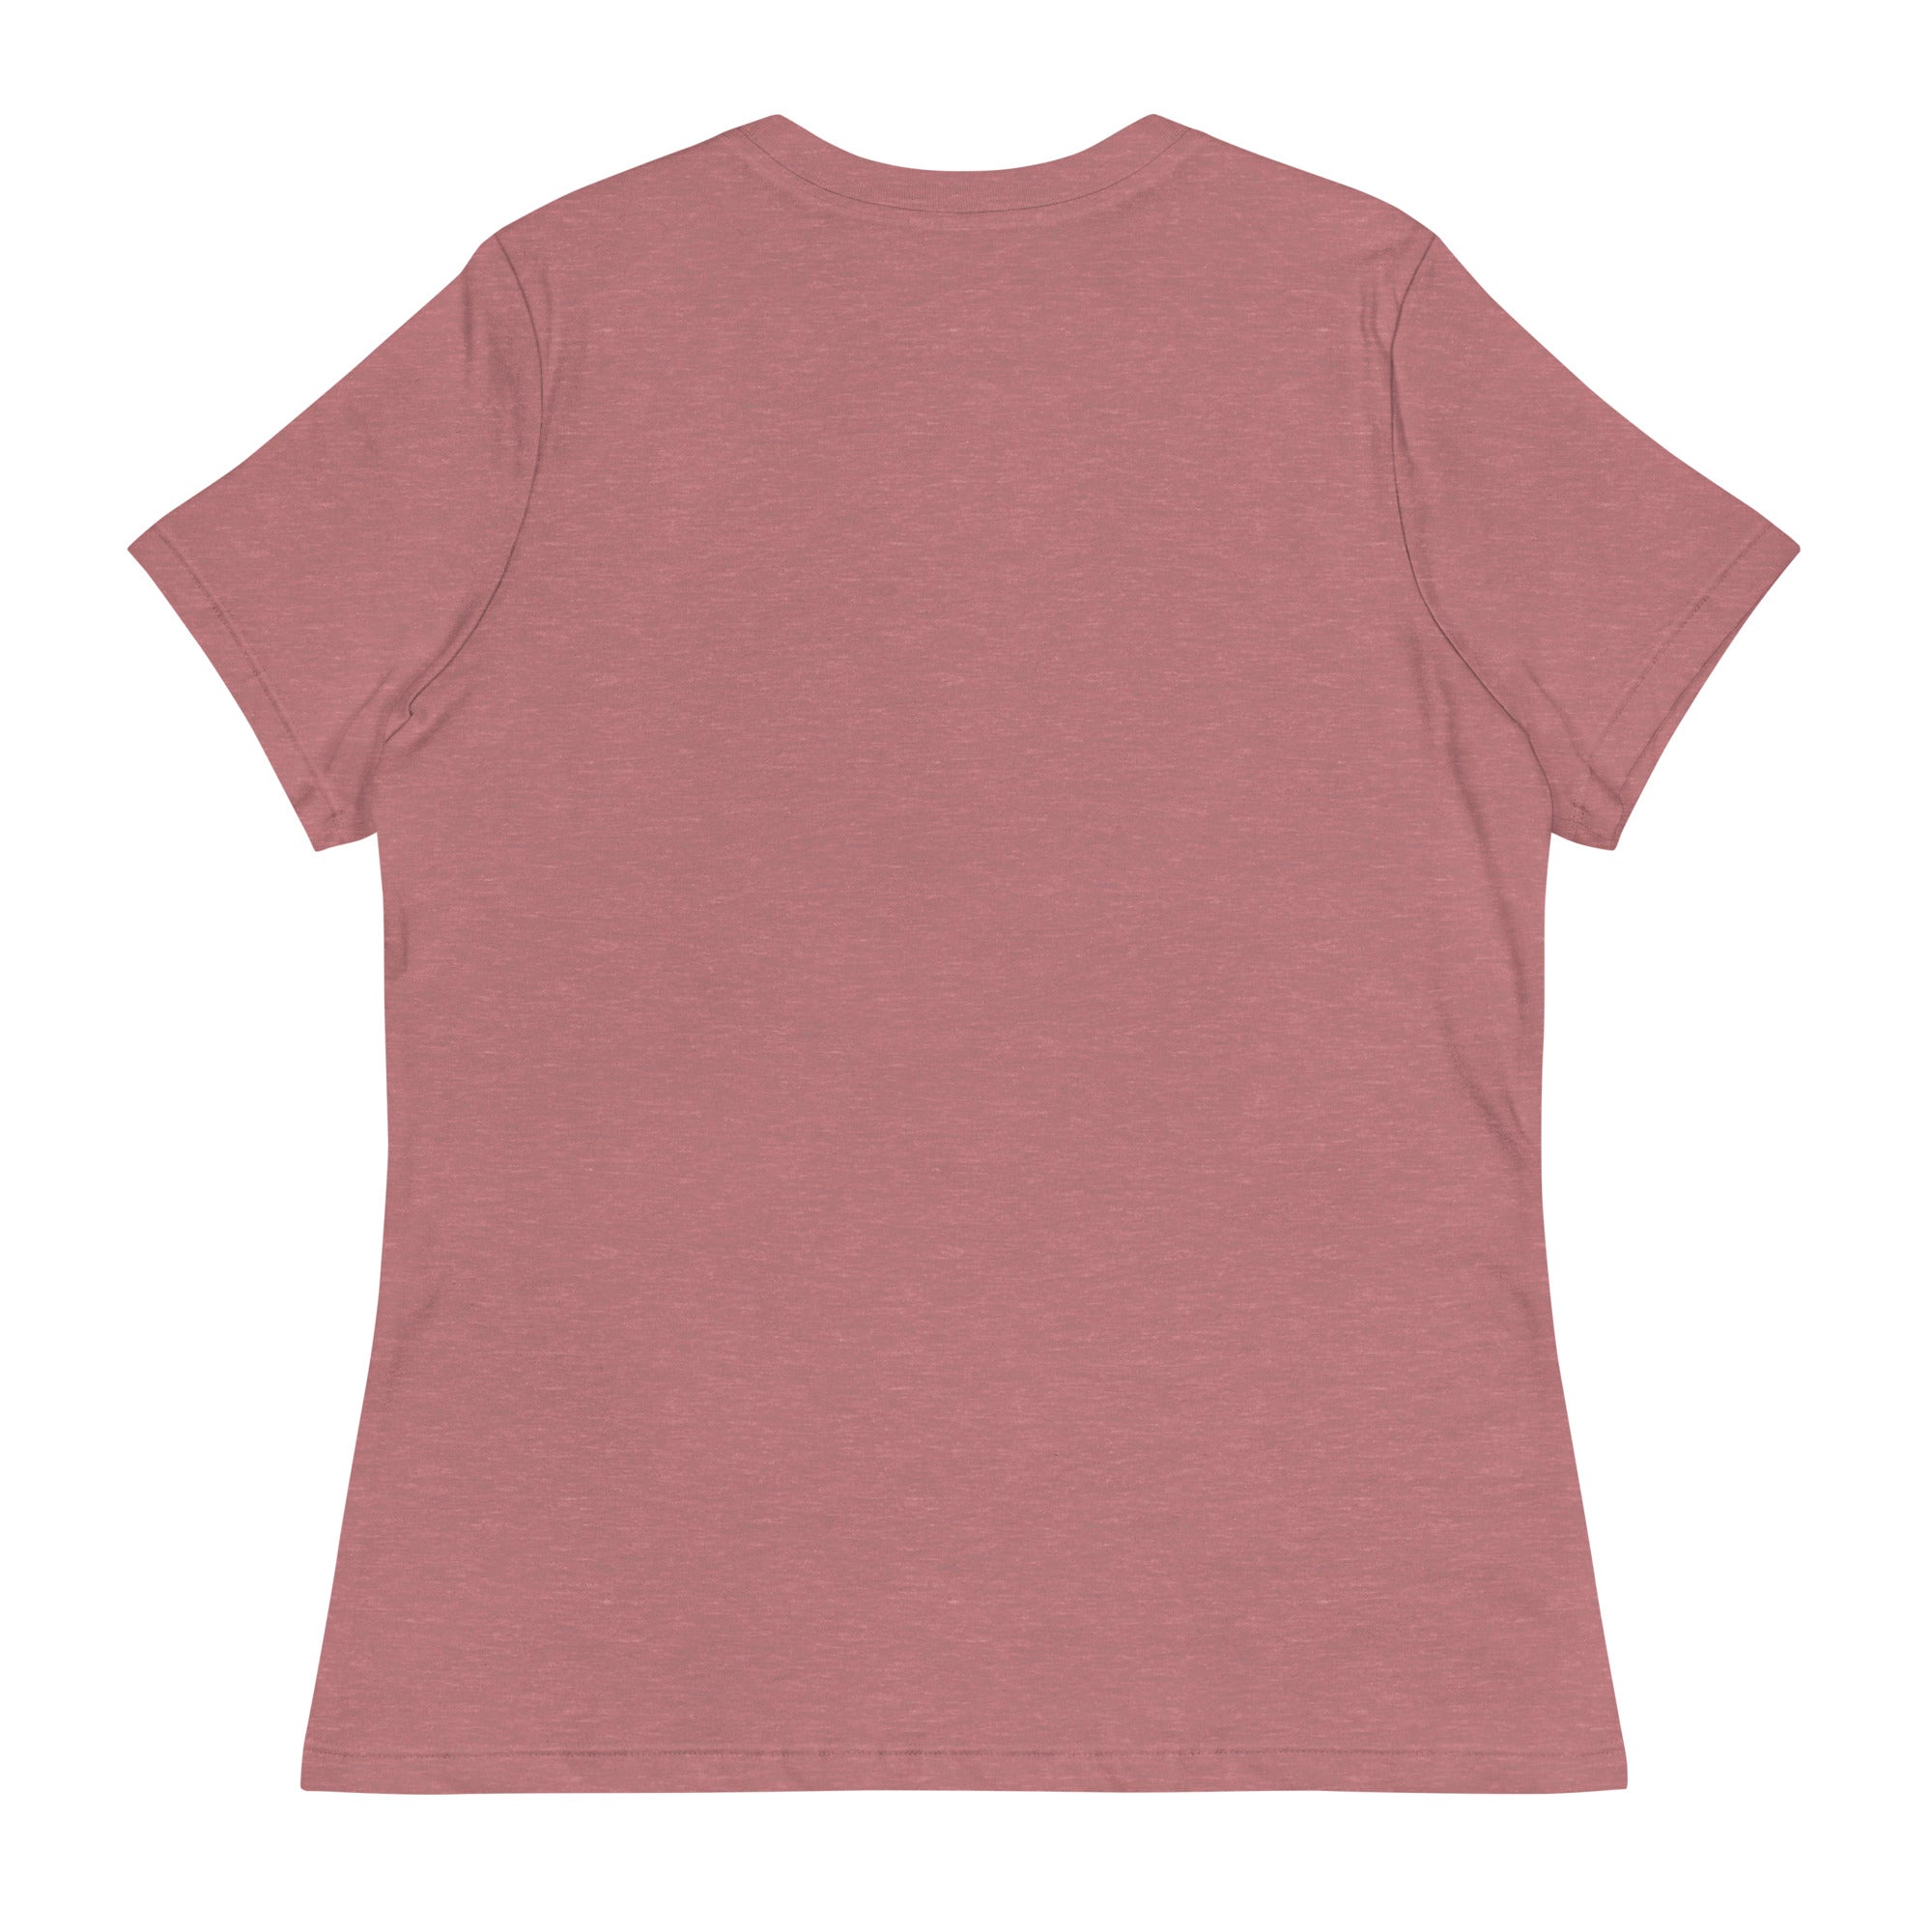 ESPRESSO - Women's Relaxed Fit Graphic T-Shirt in 16 Colors - Women's Relaxed Fit Graphic T-Shirt - DRAGON FOXX™ - 7218598_10205 - Heather Mauve - S - Athletic Heather T-shirt - Berry T-shirt - Black T-shirt